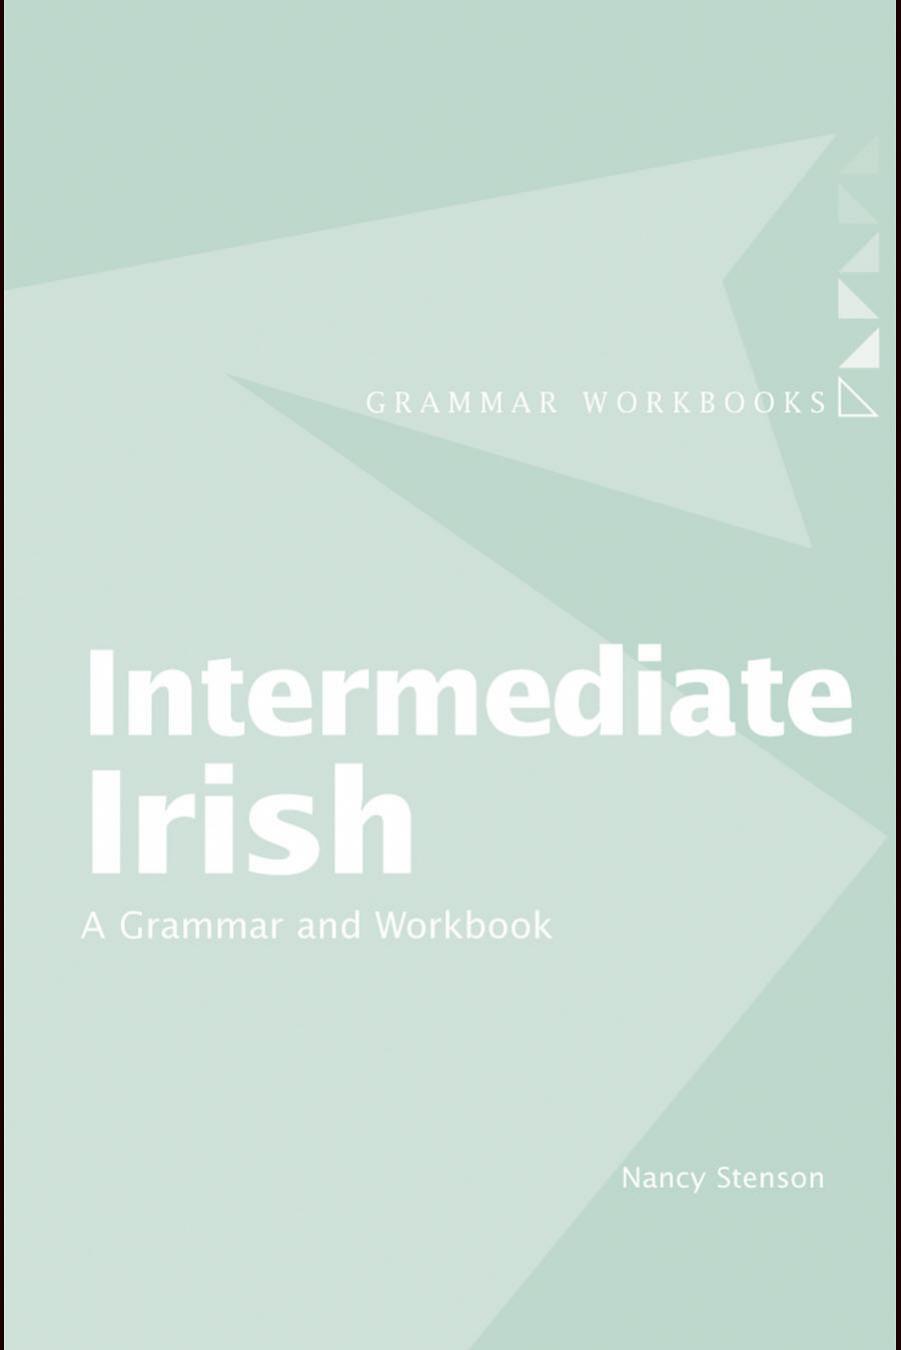 Intermediate Irish: A Grammar and Workbook